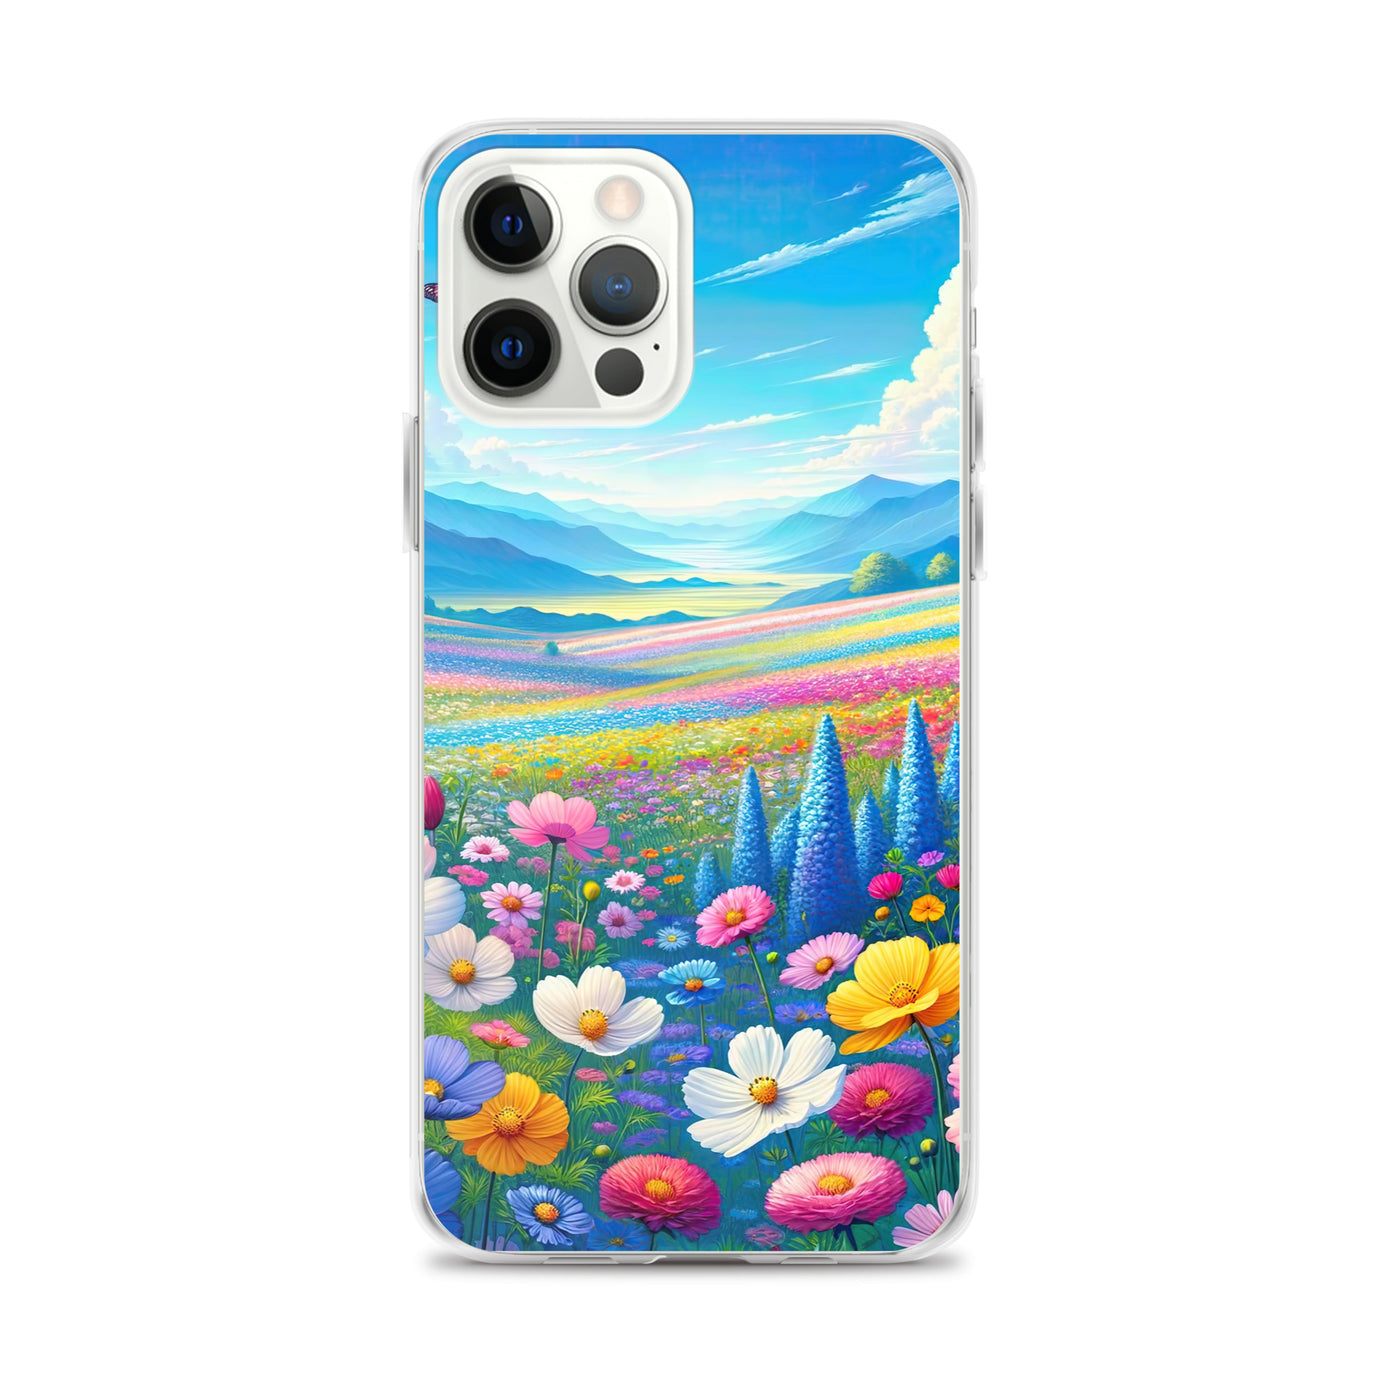 Weitläufiges Blumenfeld unter himmelblauem Himmel, leuchtende Flora - iPhone Schutzhülle (durchsichtig) camping xxx yyy zzz iPhone 12 Pro Max